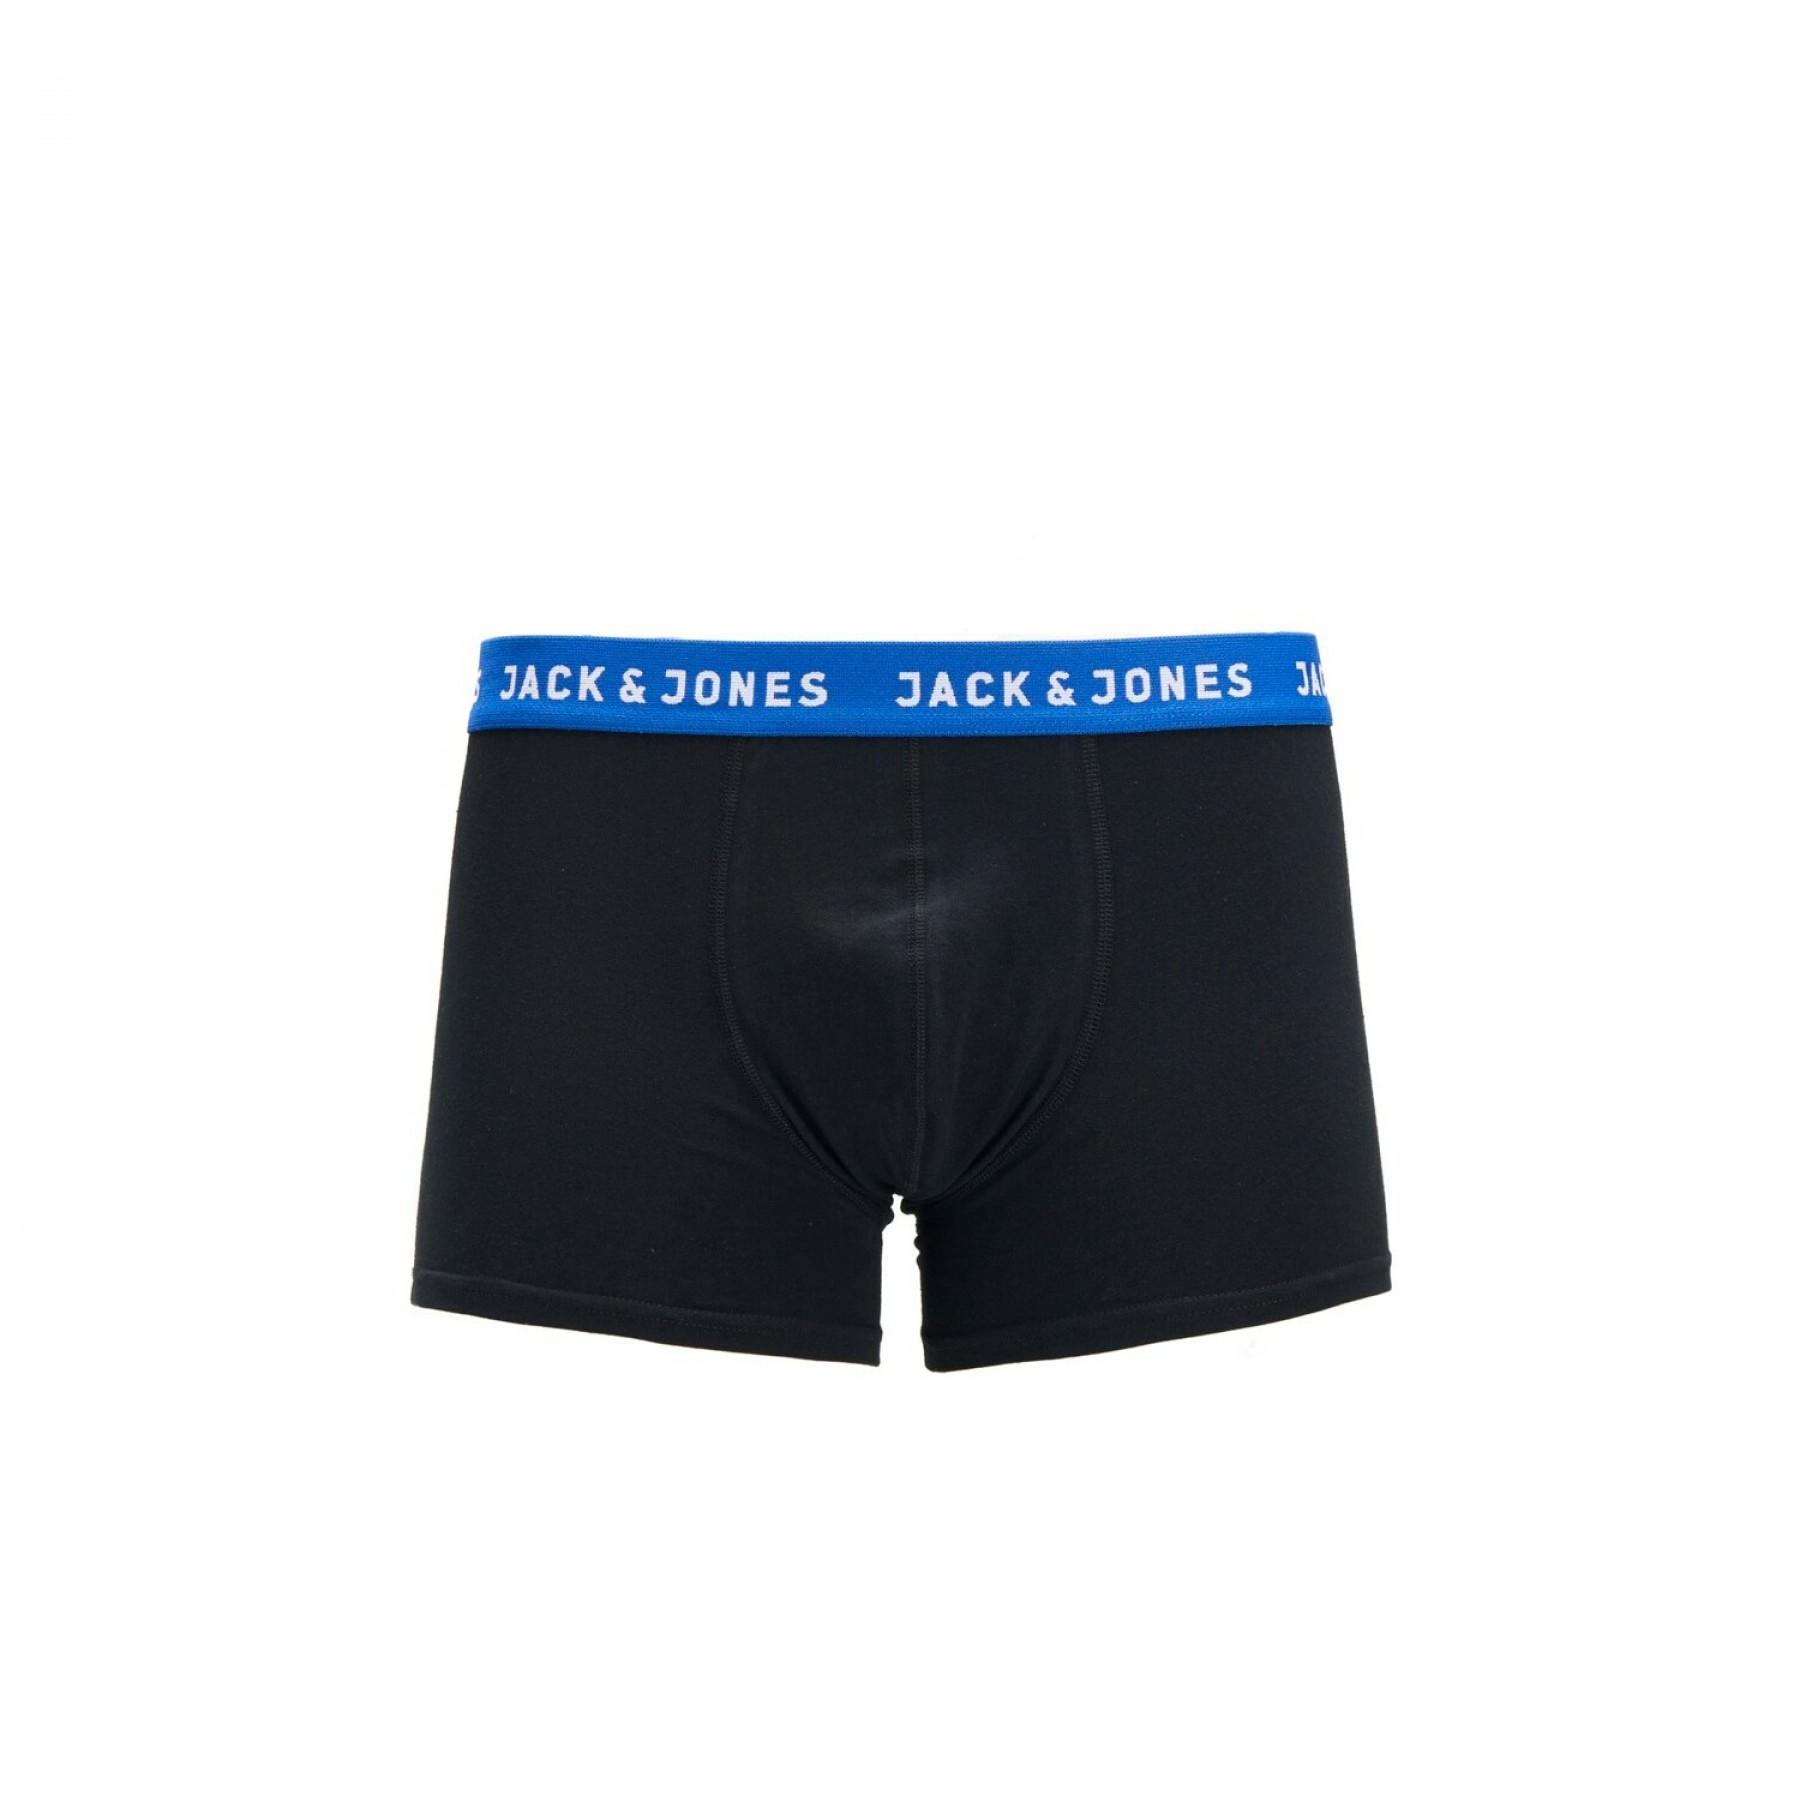 Set of 2 boxer shorts Jack & Jones Jacrich